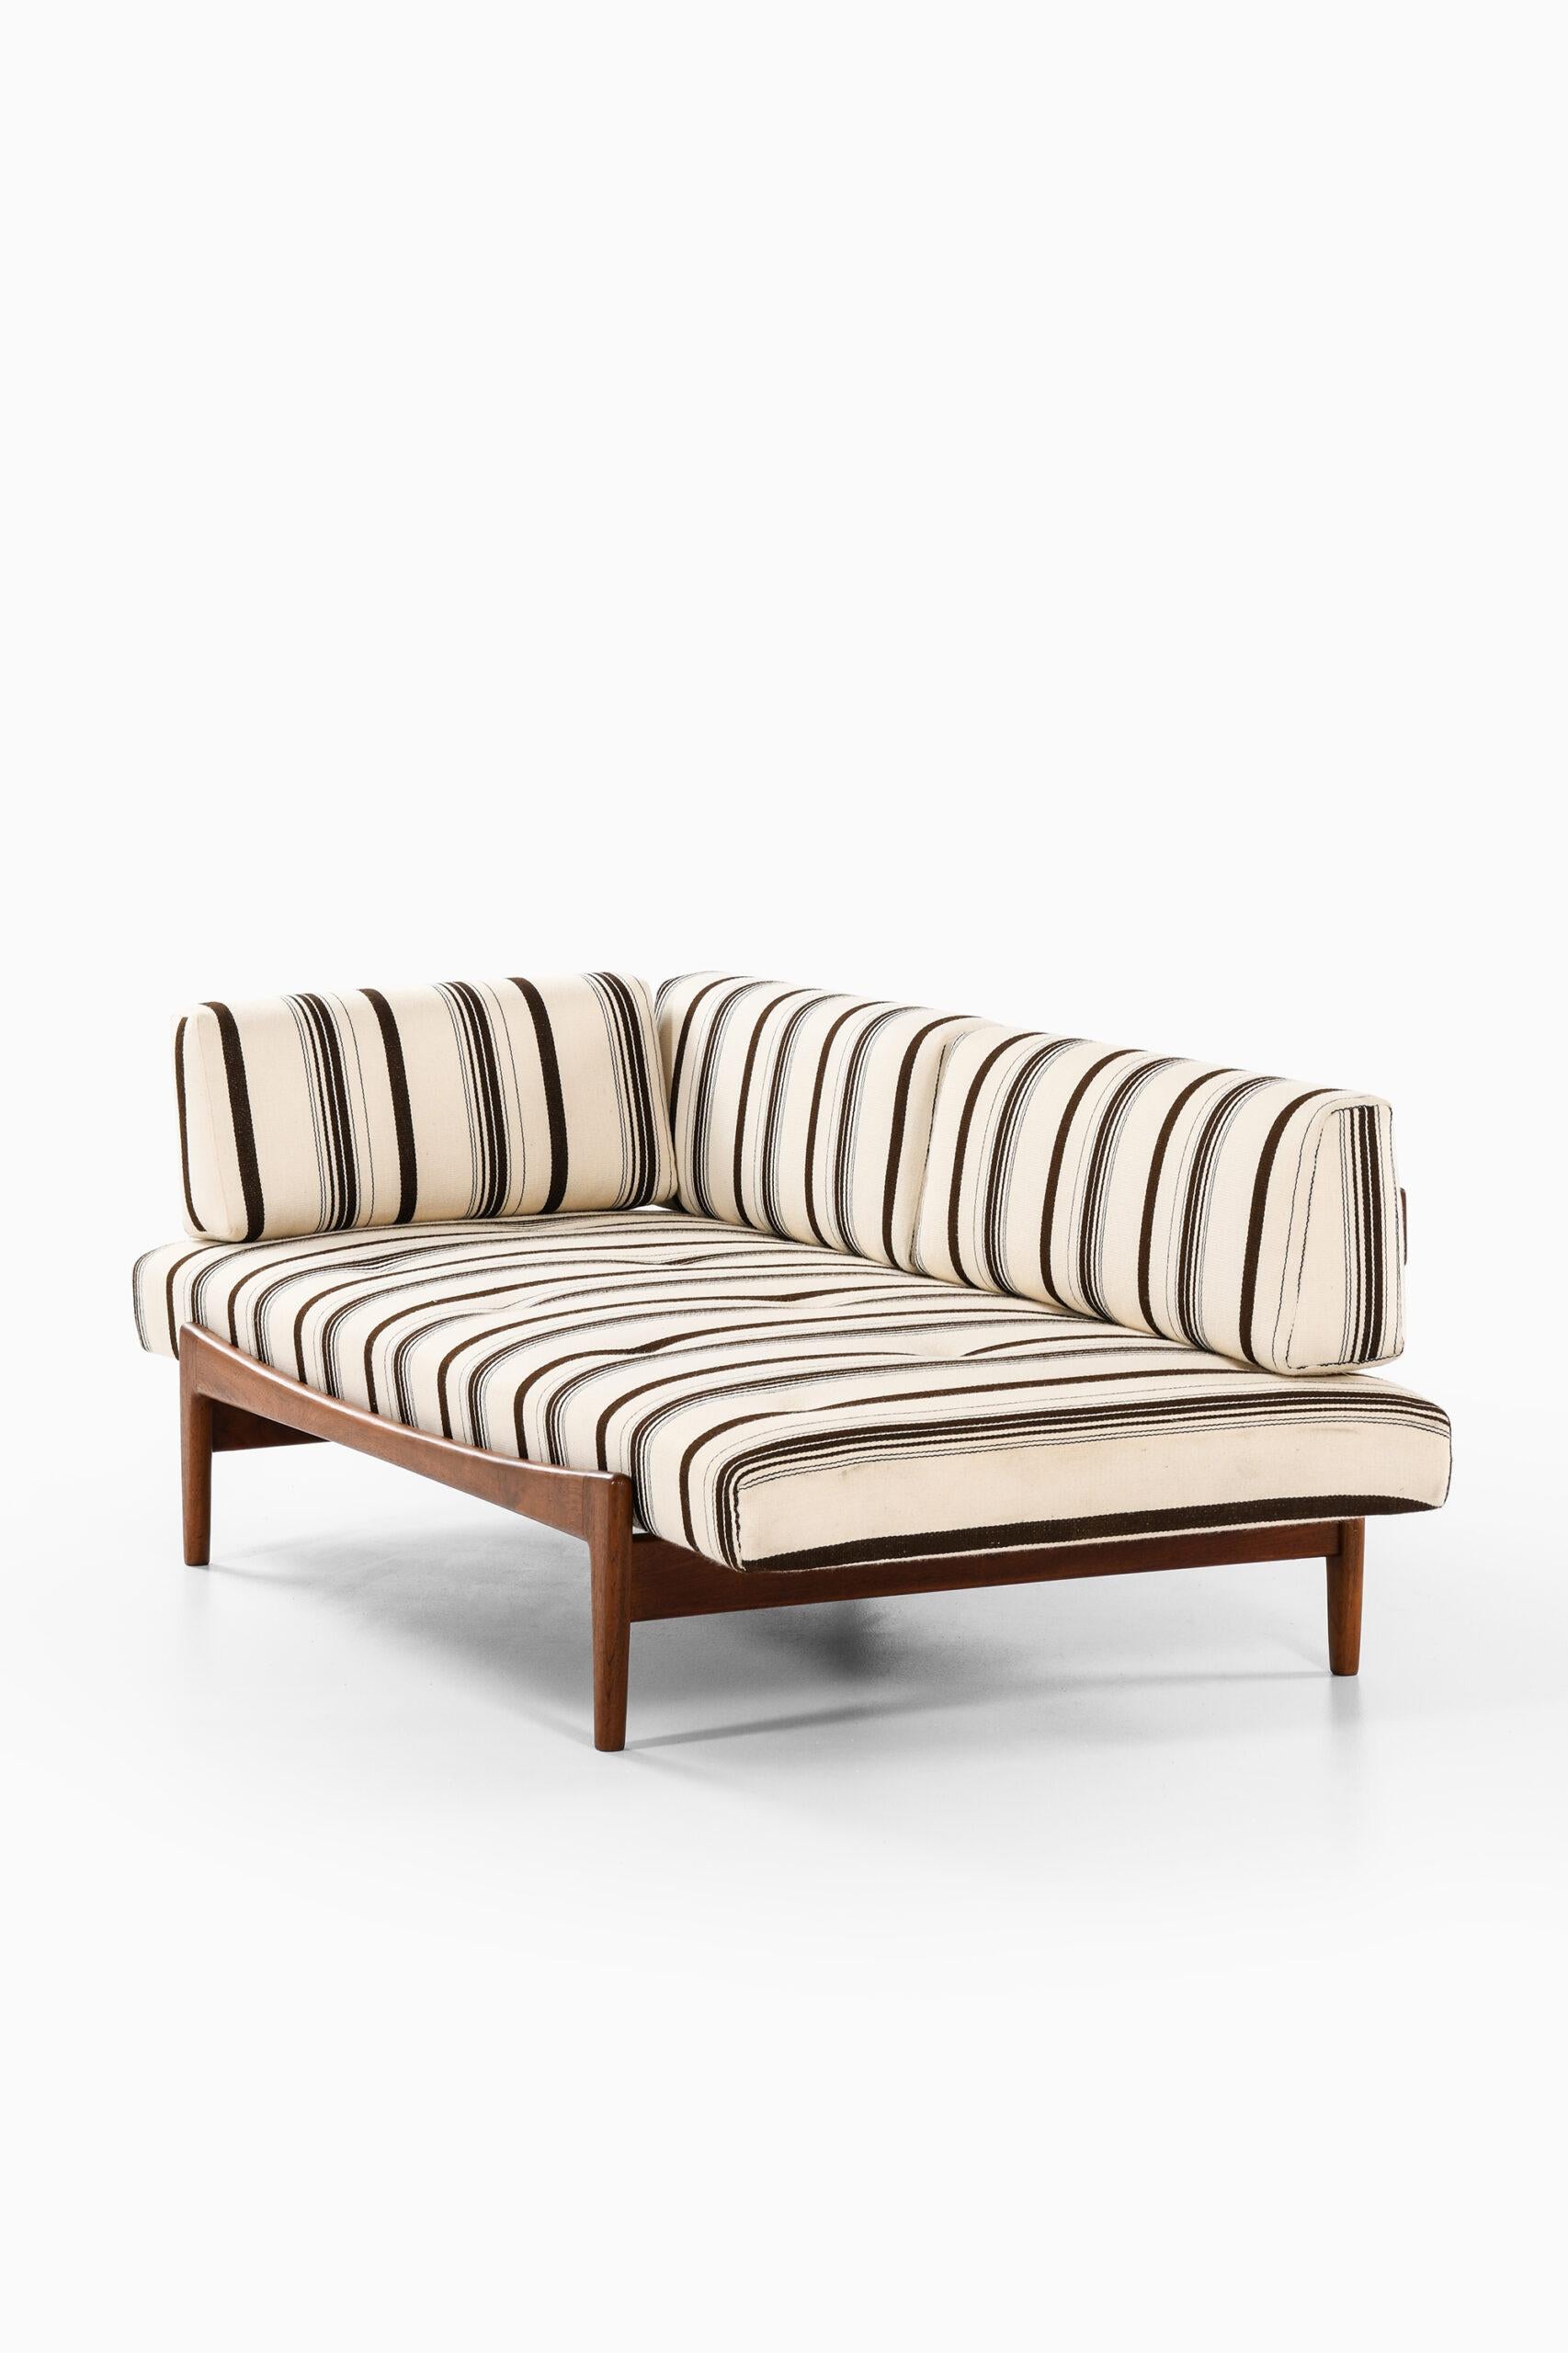 Mid-20th Century  Ib Kofod-Larsen Sofa / Daybed Produced by Seffle Möbelfabrik